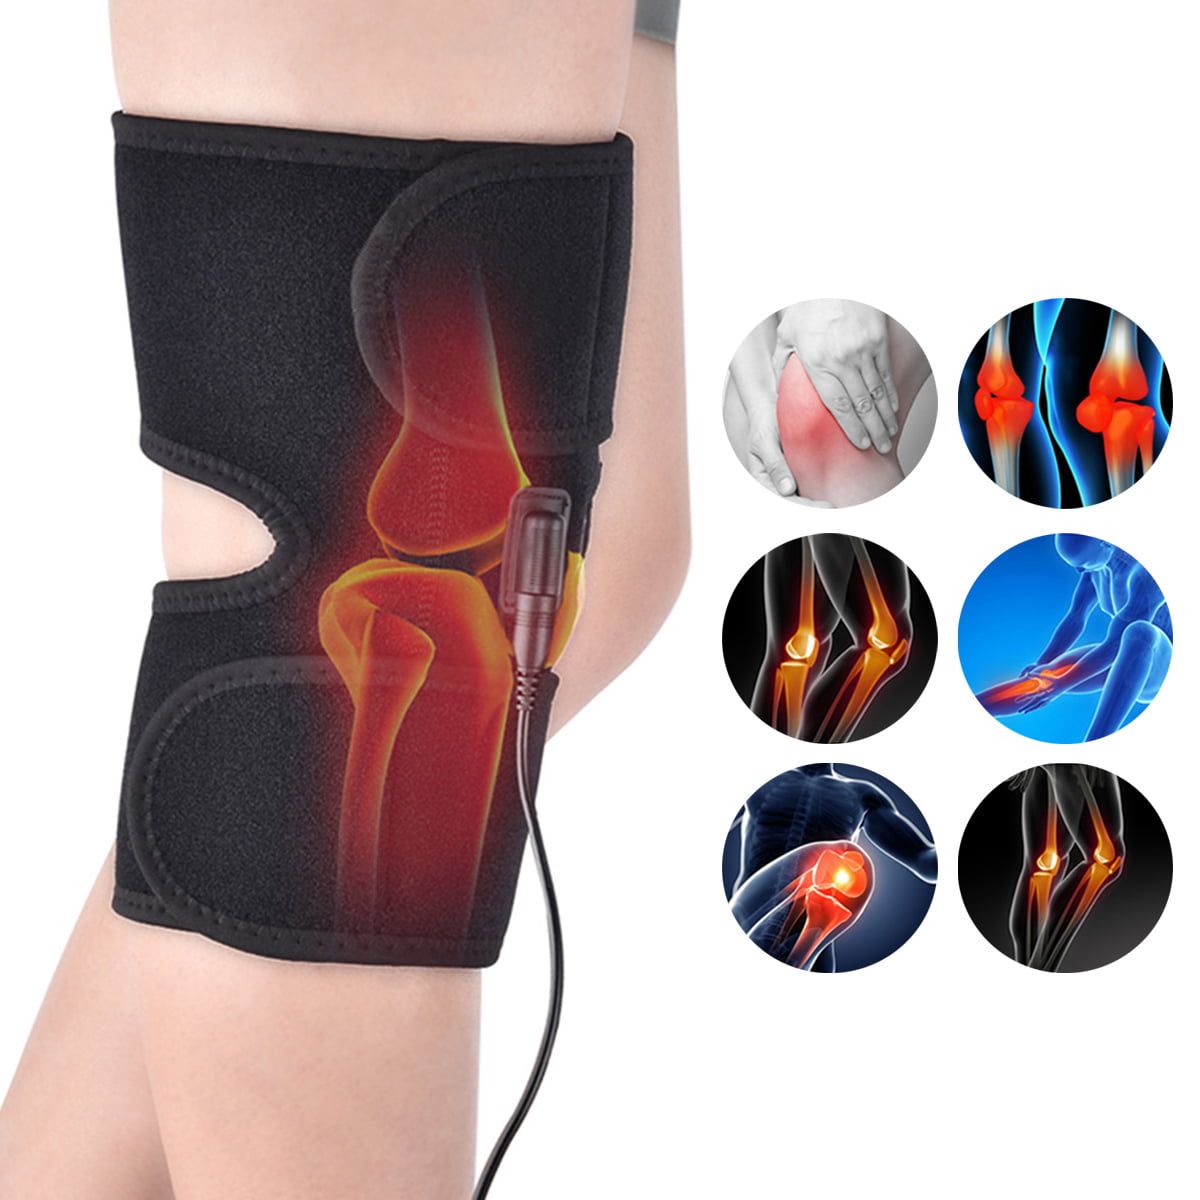 heating pad for knee injury